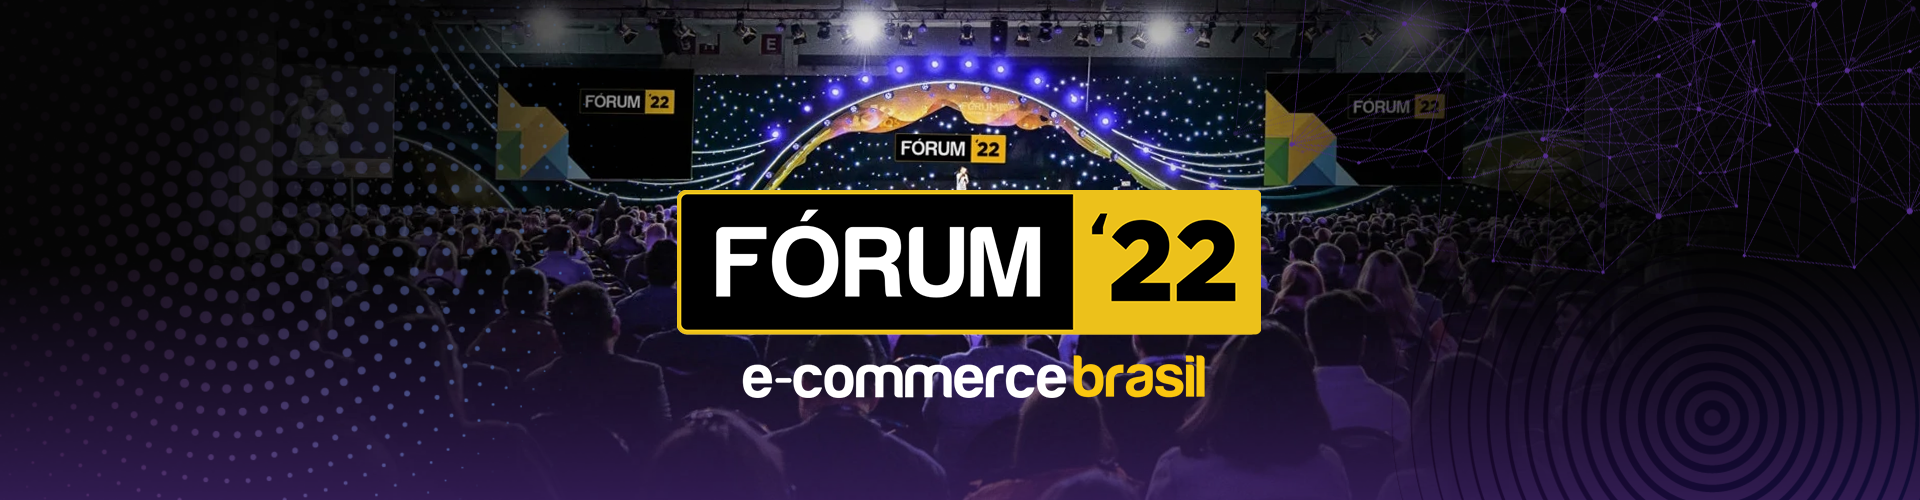 OmniK estará presente no Fórum E-commerce Brasil 2022